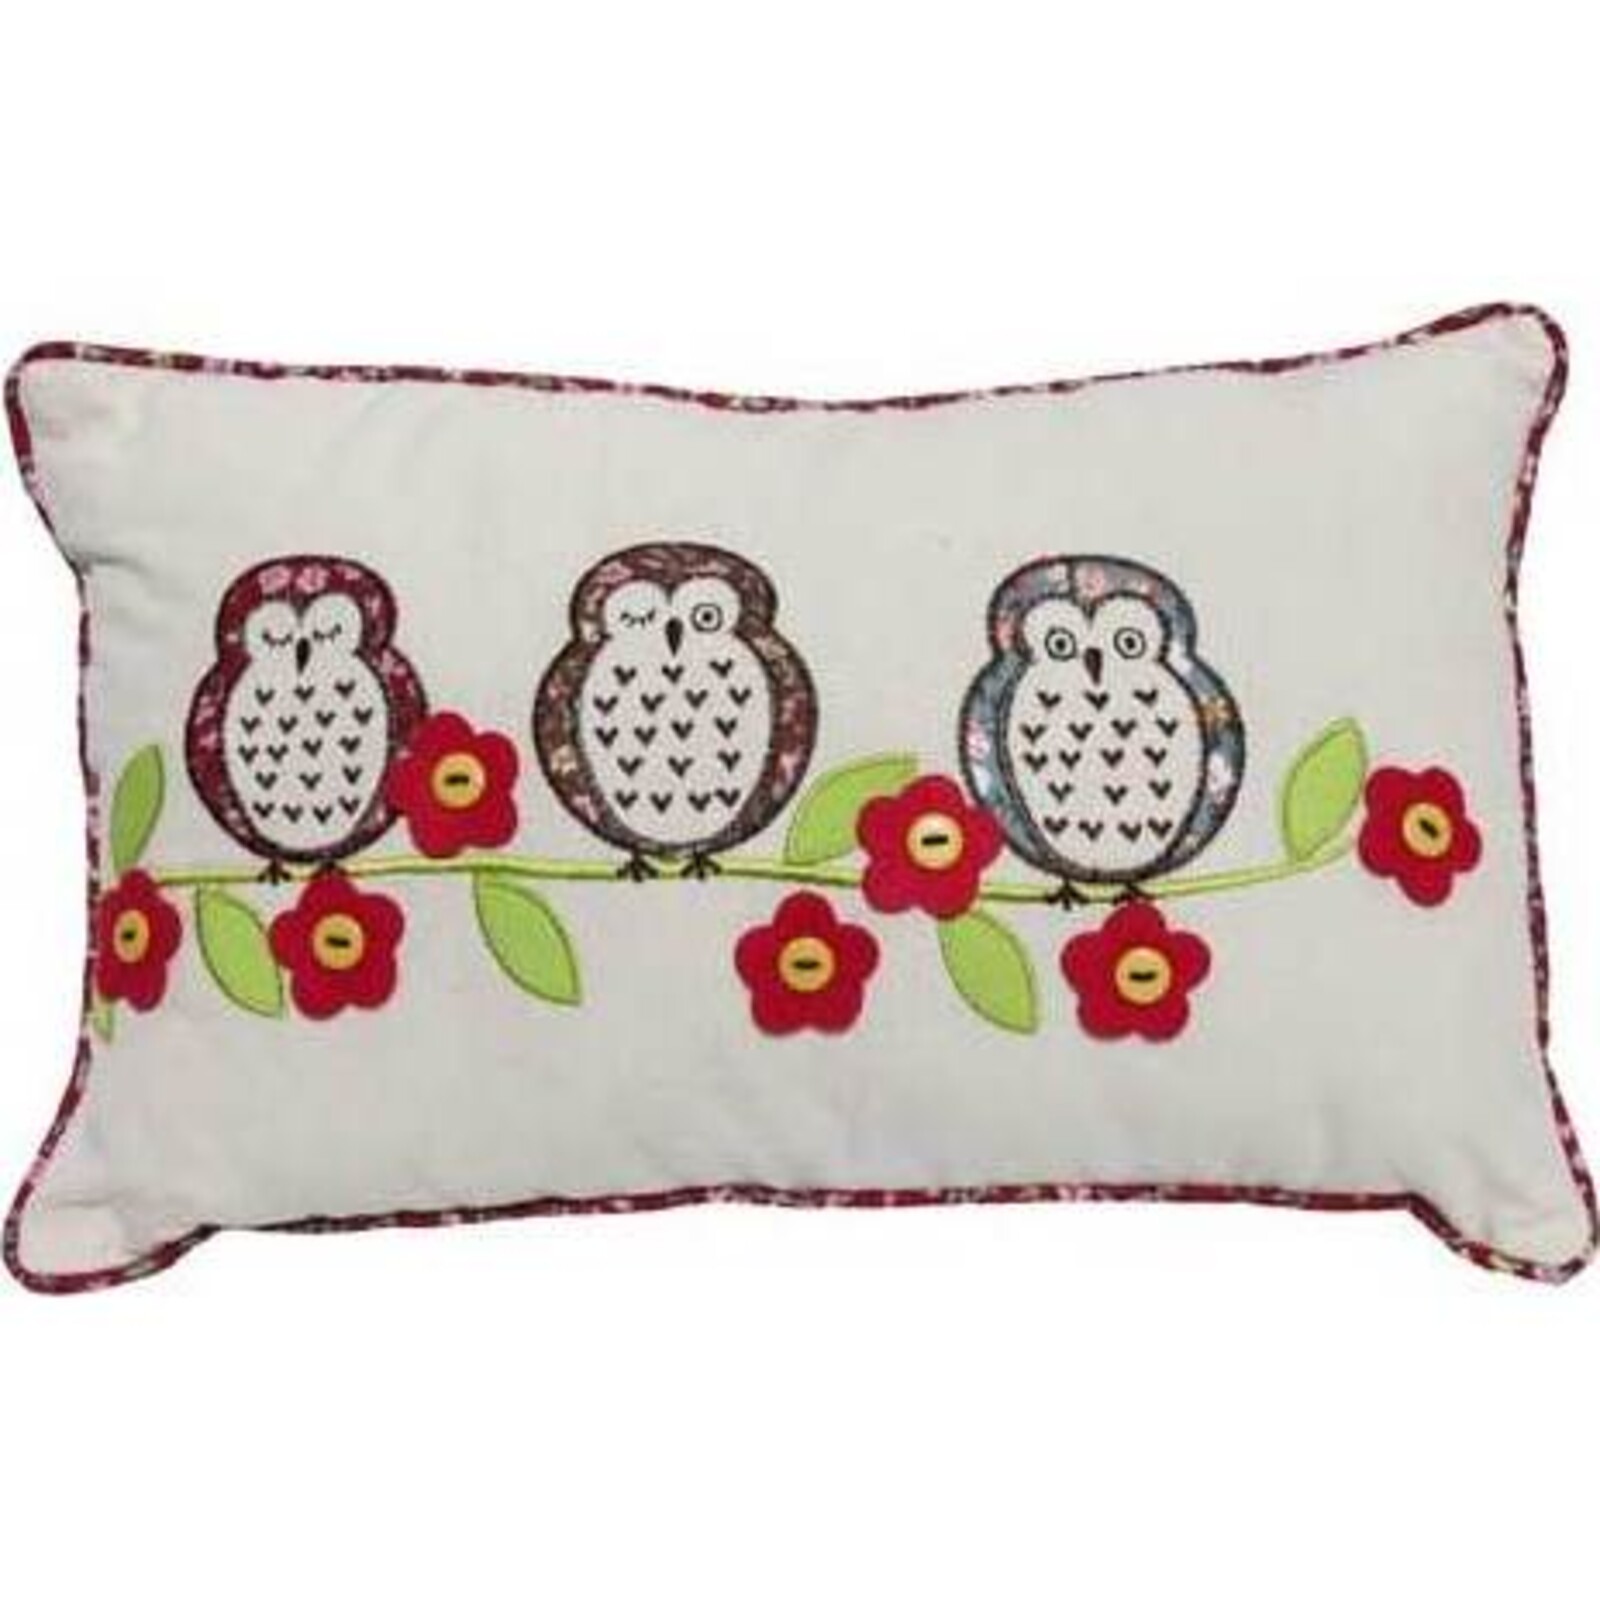 Cushion - Winky Owl